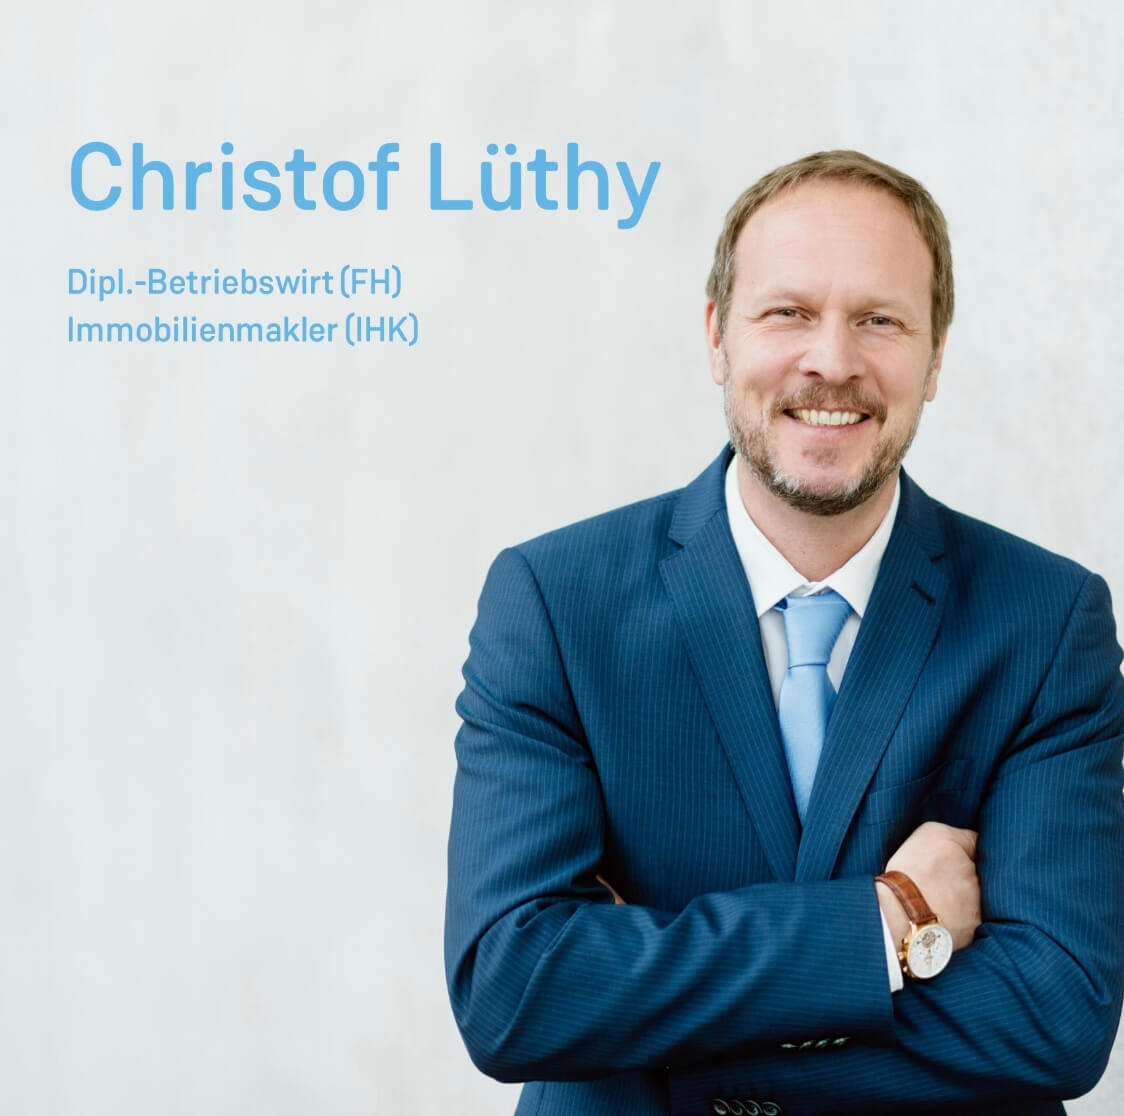 Christof Luethy